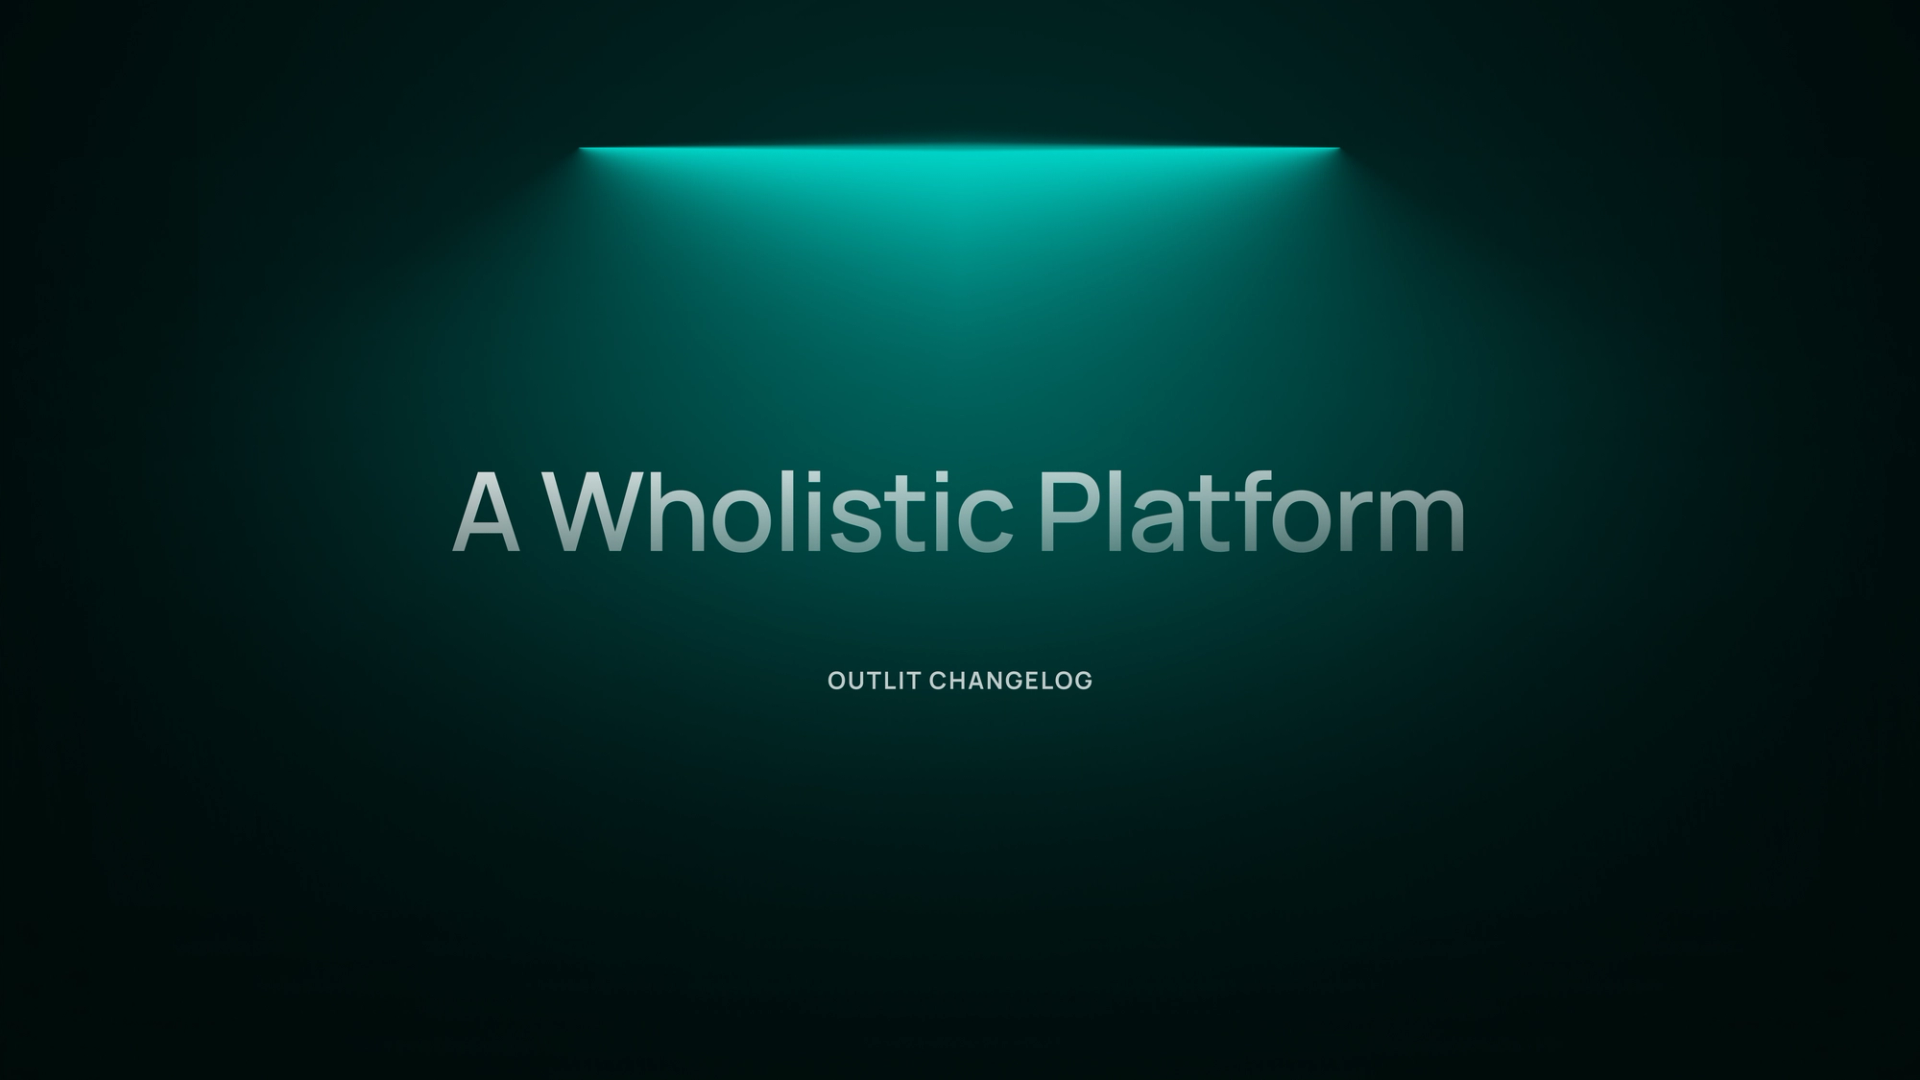 A Wholistic Platform